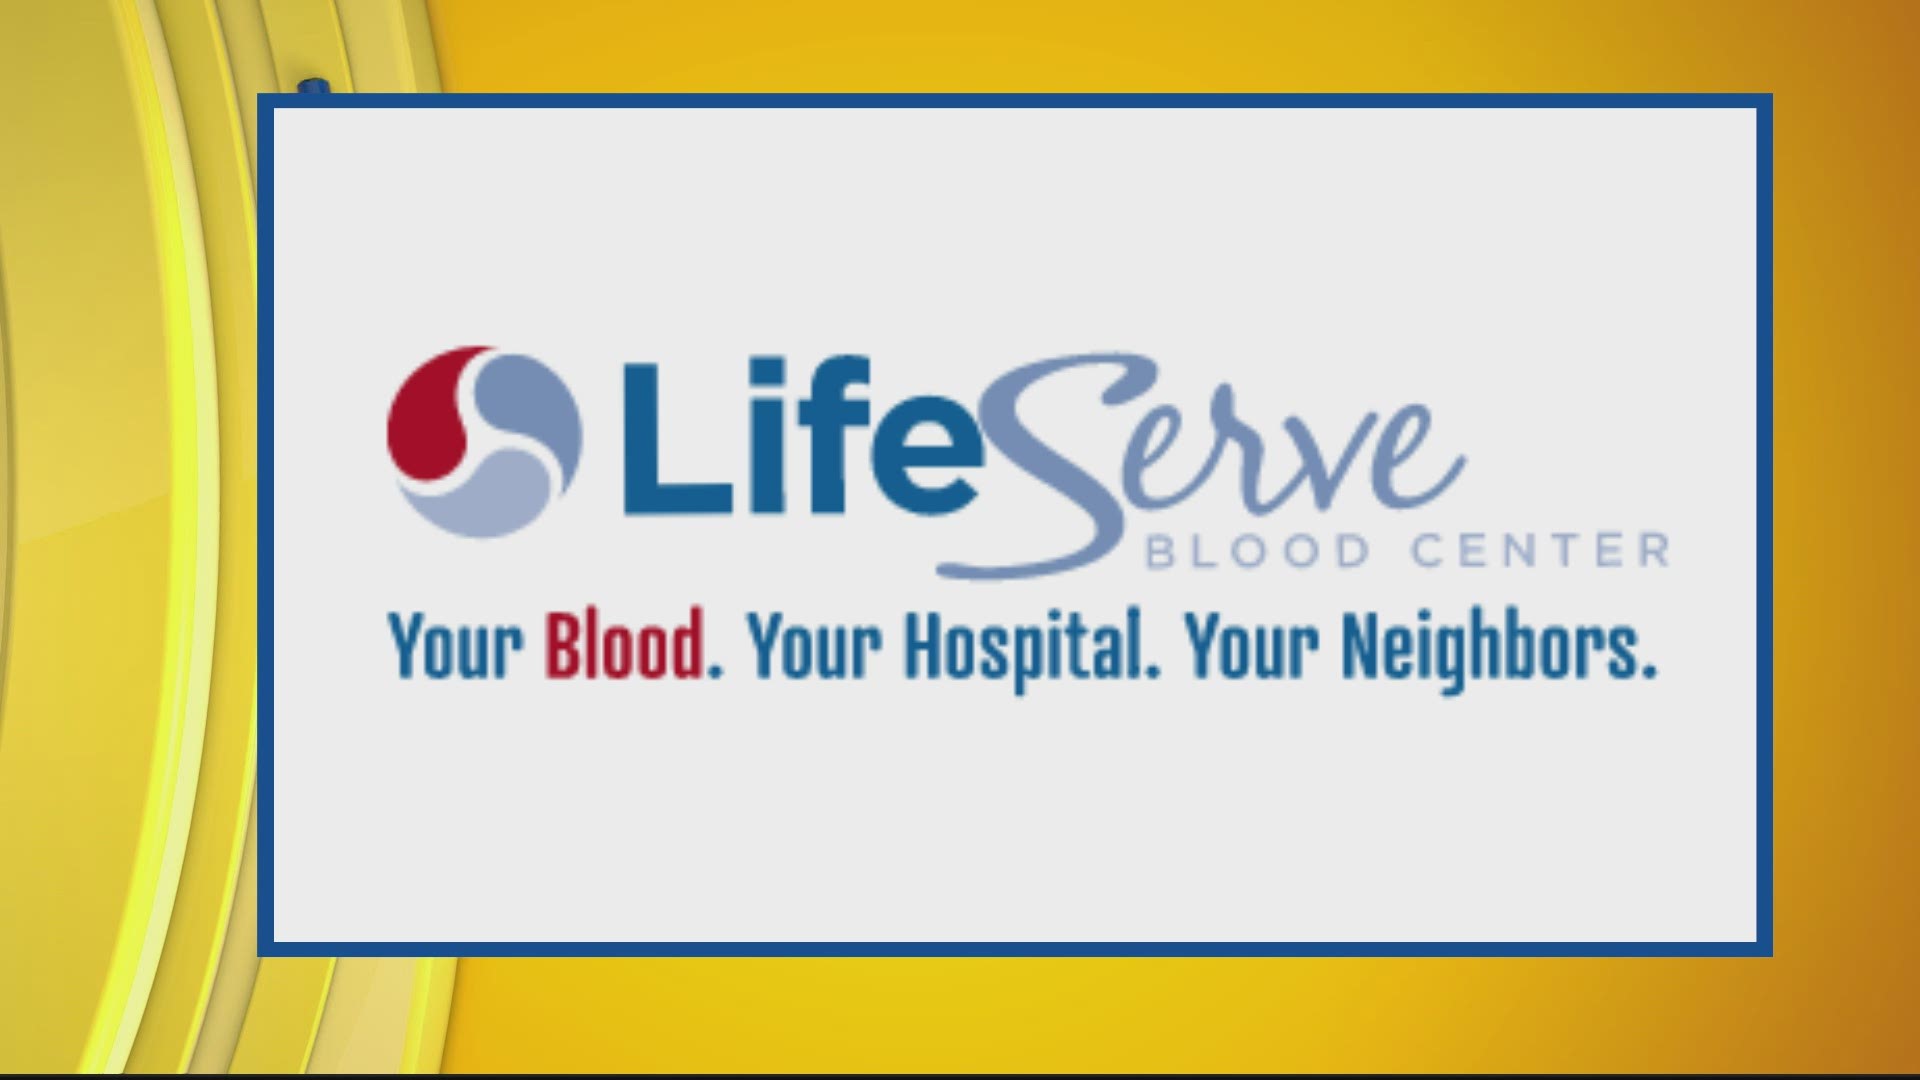 Lifeserve is providing antibody testing